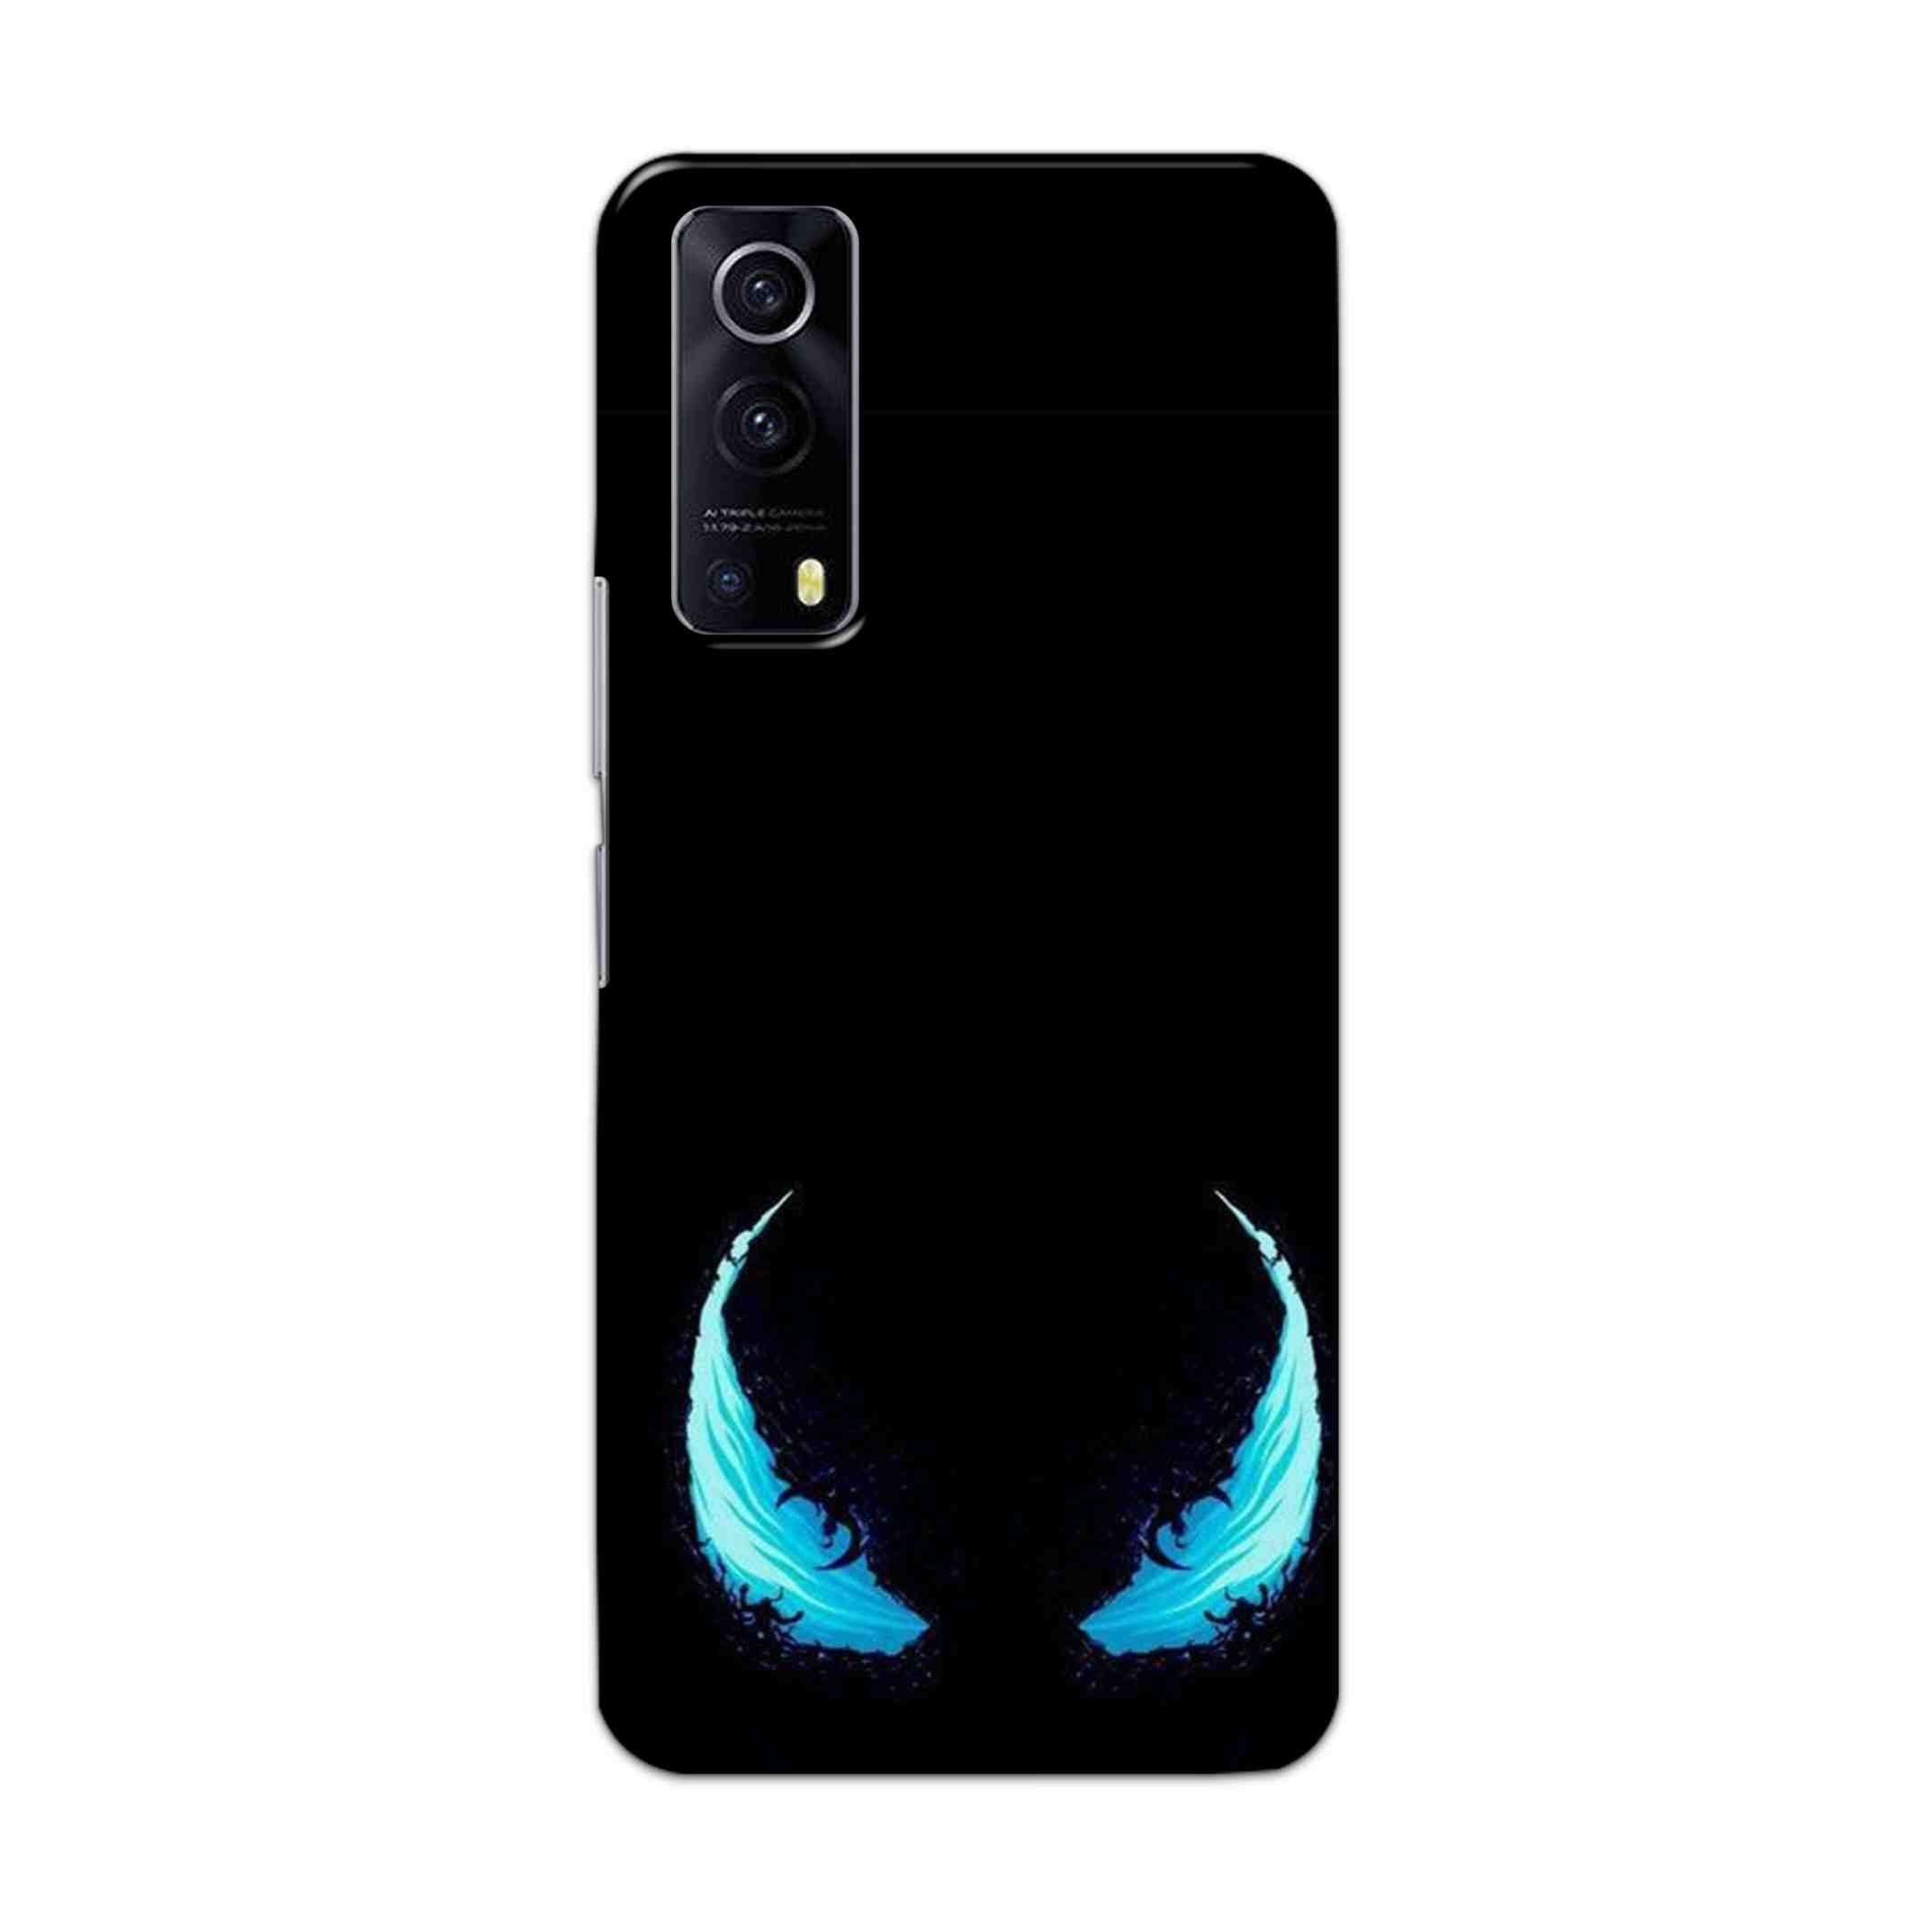 Buy Venom Eyes Hard Back Mobile Phone Case Cover For Vivo IQOO Z3 Online